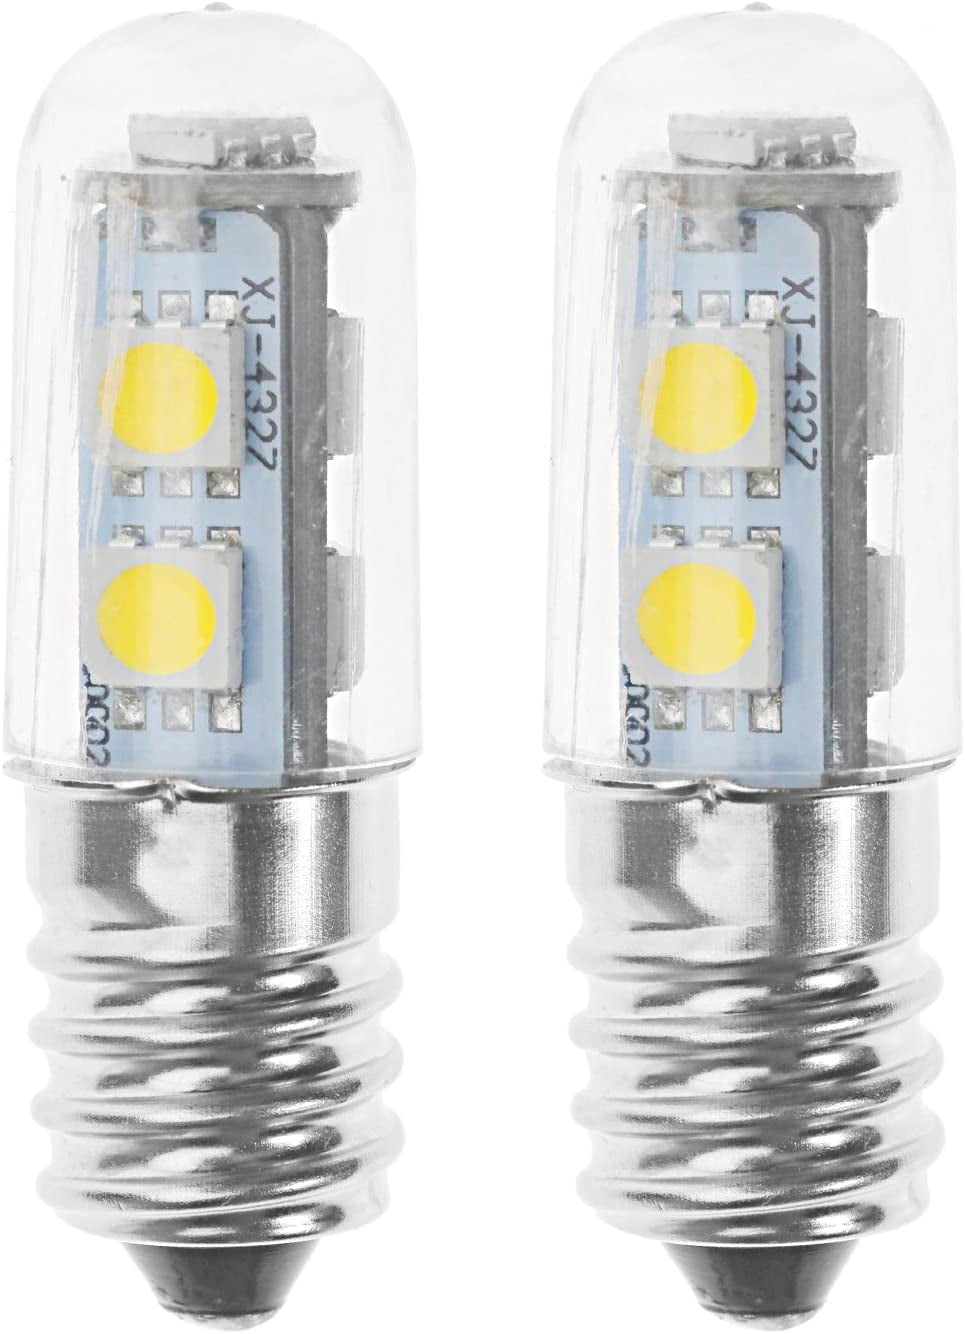 Skalk Richtlijnen Verbinding 2pcs E14 Mini LED Light Bulb 1W 220v Warm White 2700K-3000K Lamps  Compatible with Range Hood Refrigerator - Walmart.com